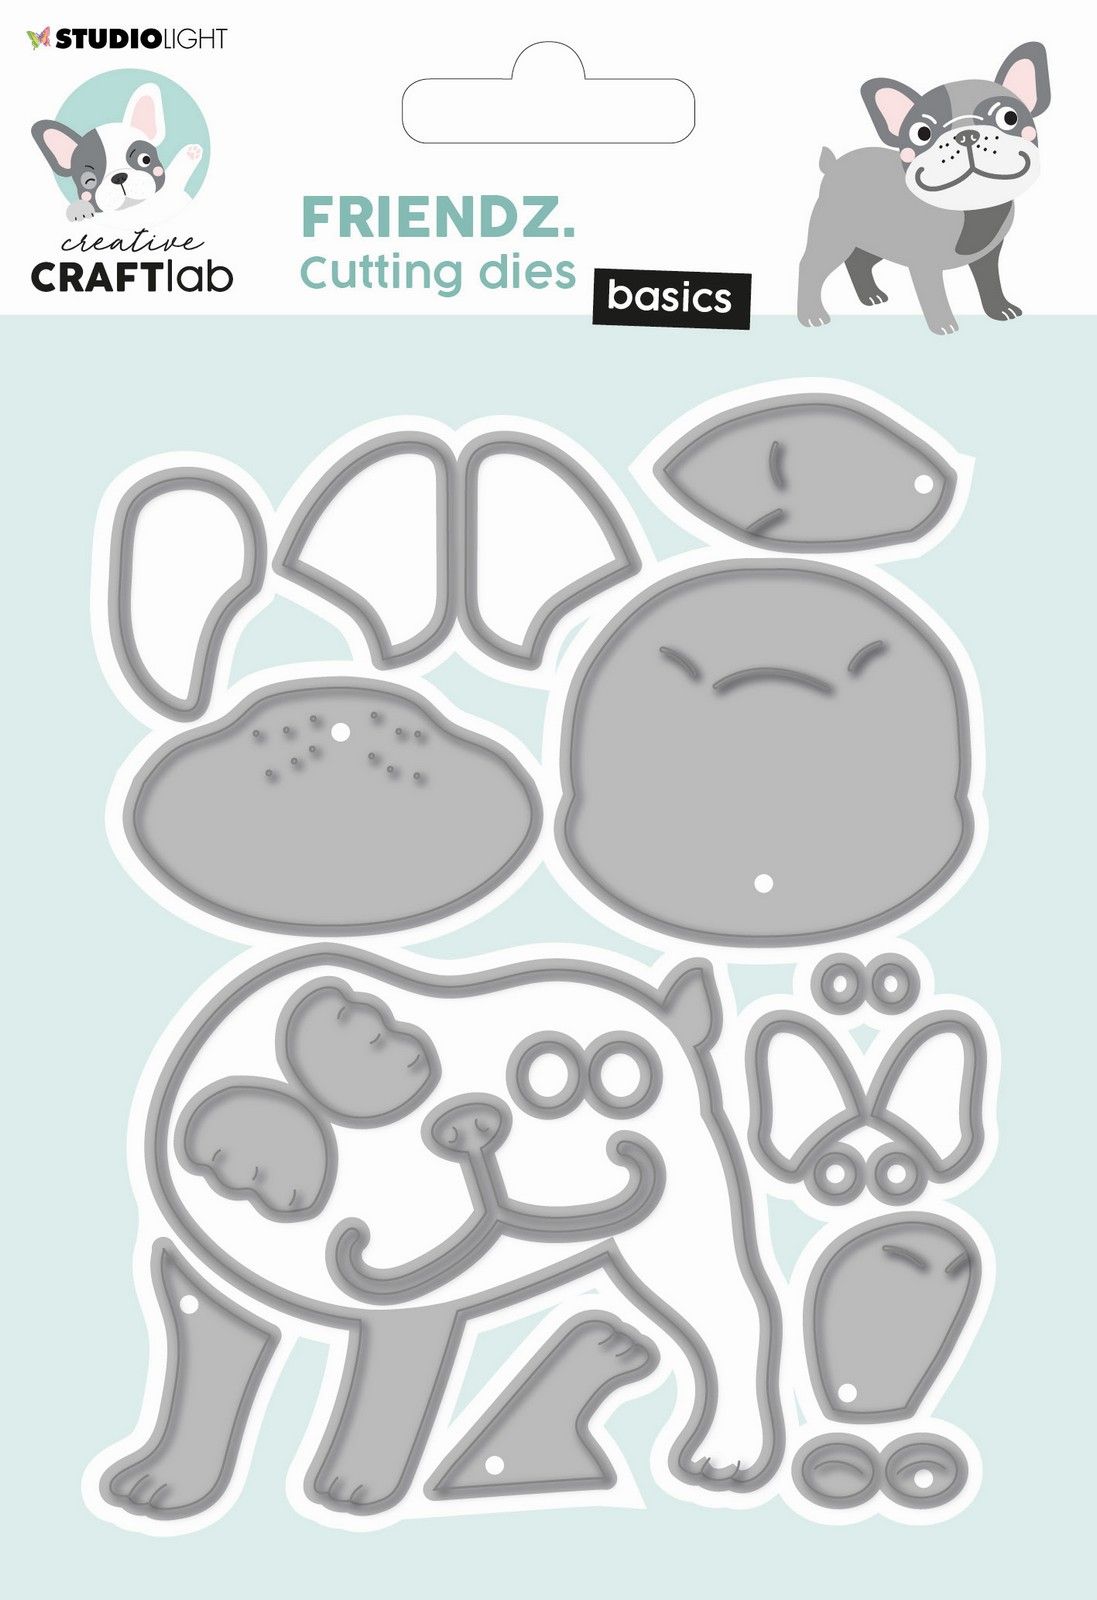 Creative Craftlab • Friendz cutting dies Buddy